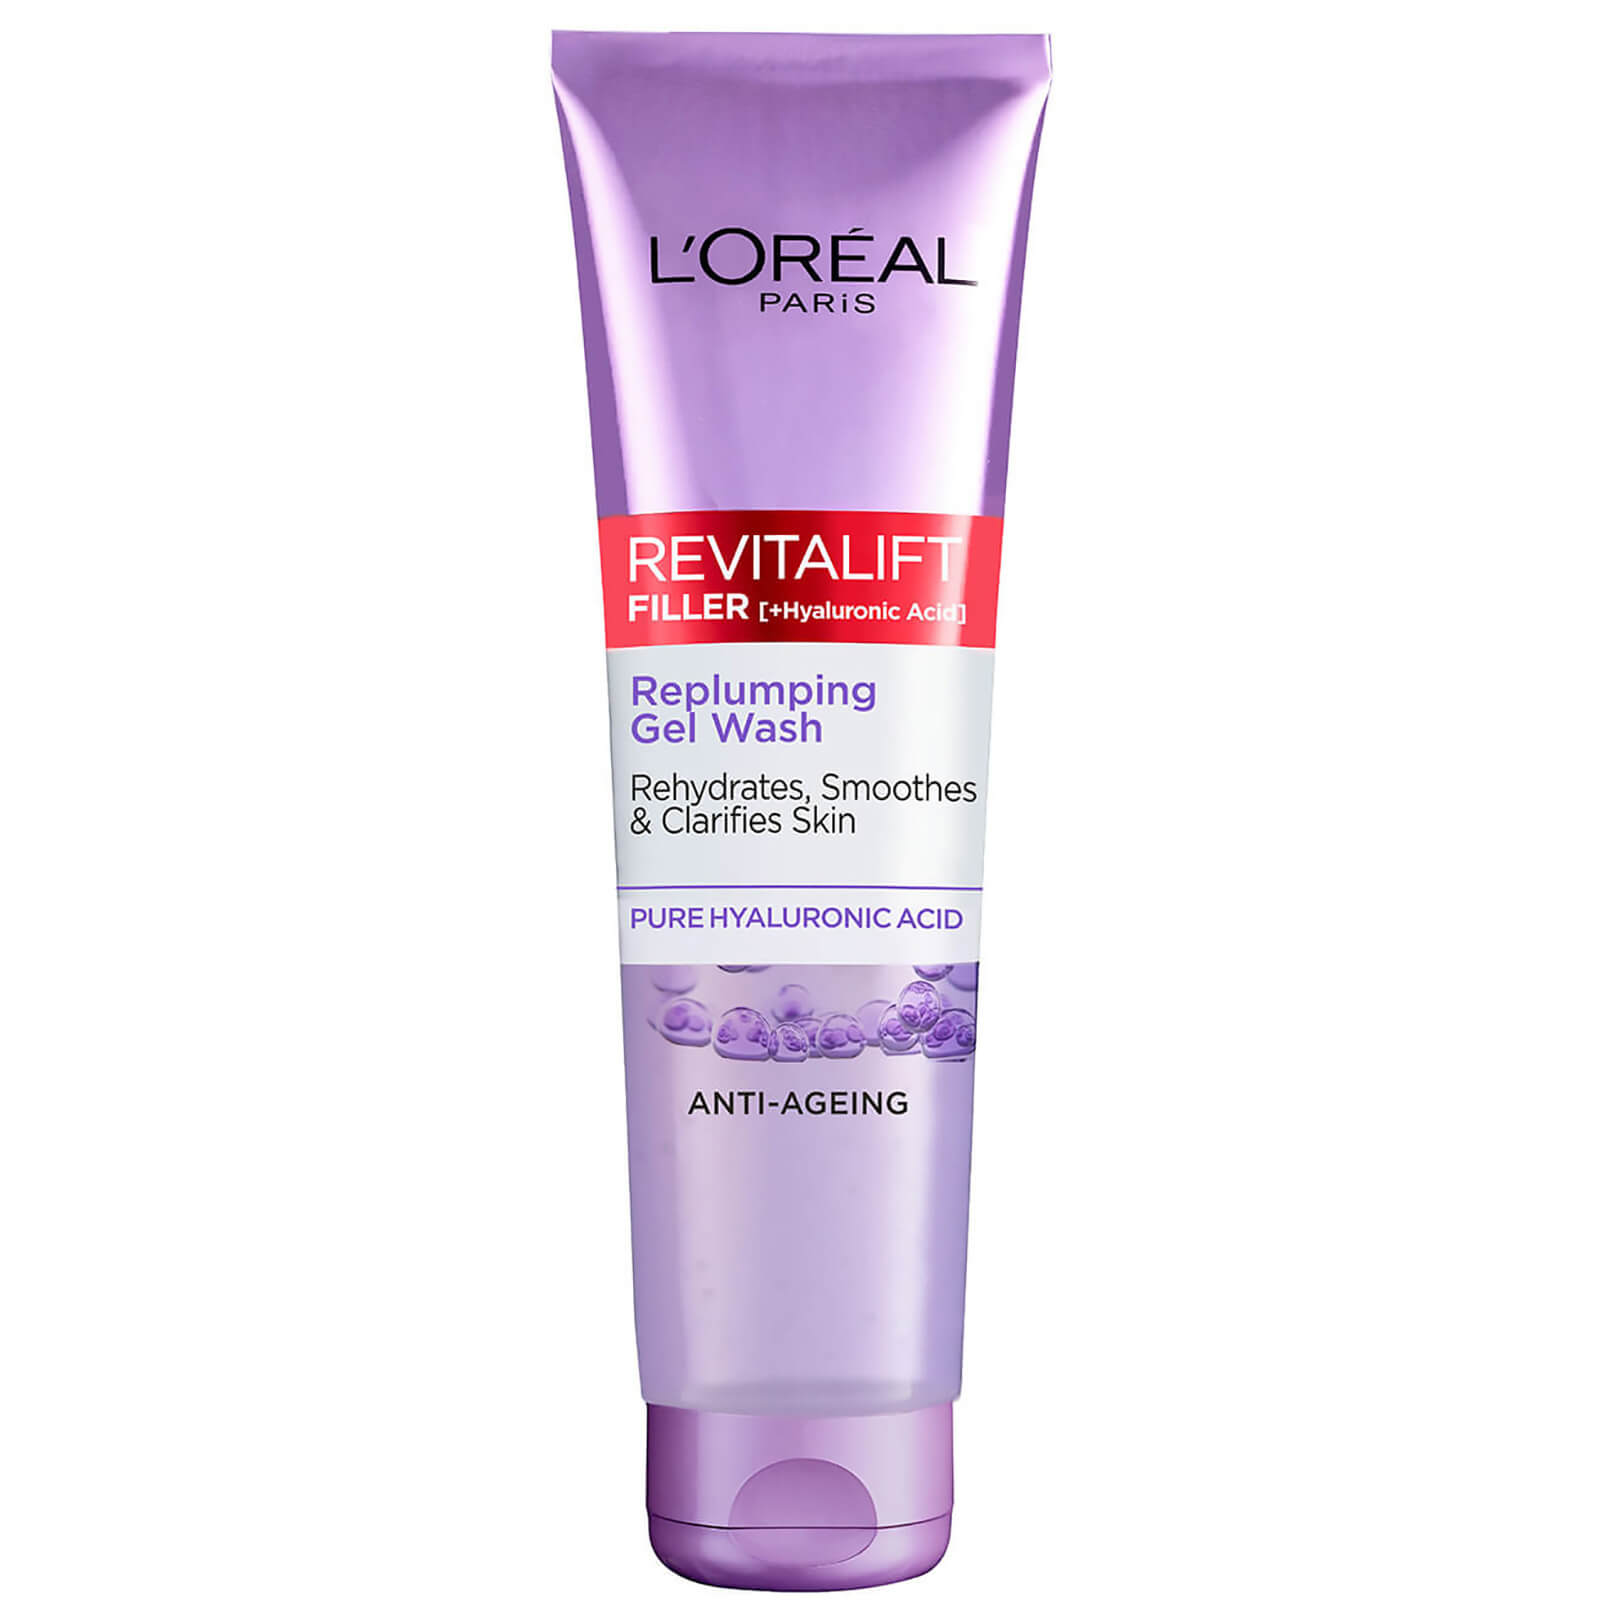 Photos - Facial / Body Cleansing Product LOreal L'Oréal Paris Revitalift Filler  Gel Face Wash Cleanser [+ Hyaluronic Acid]